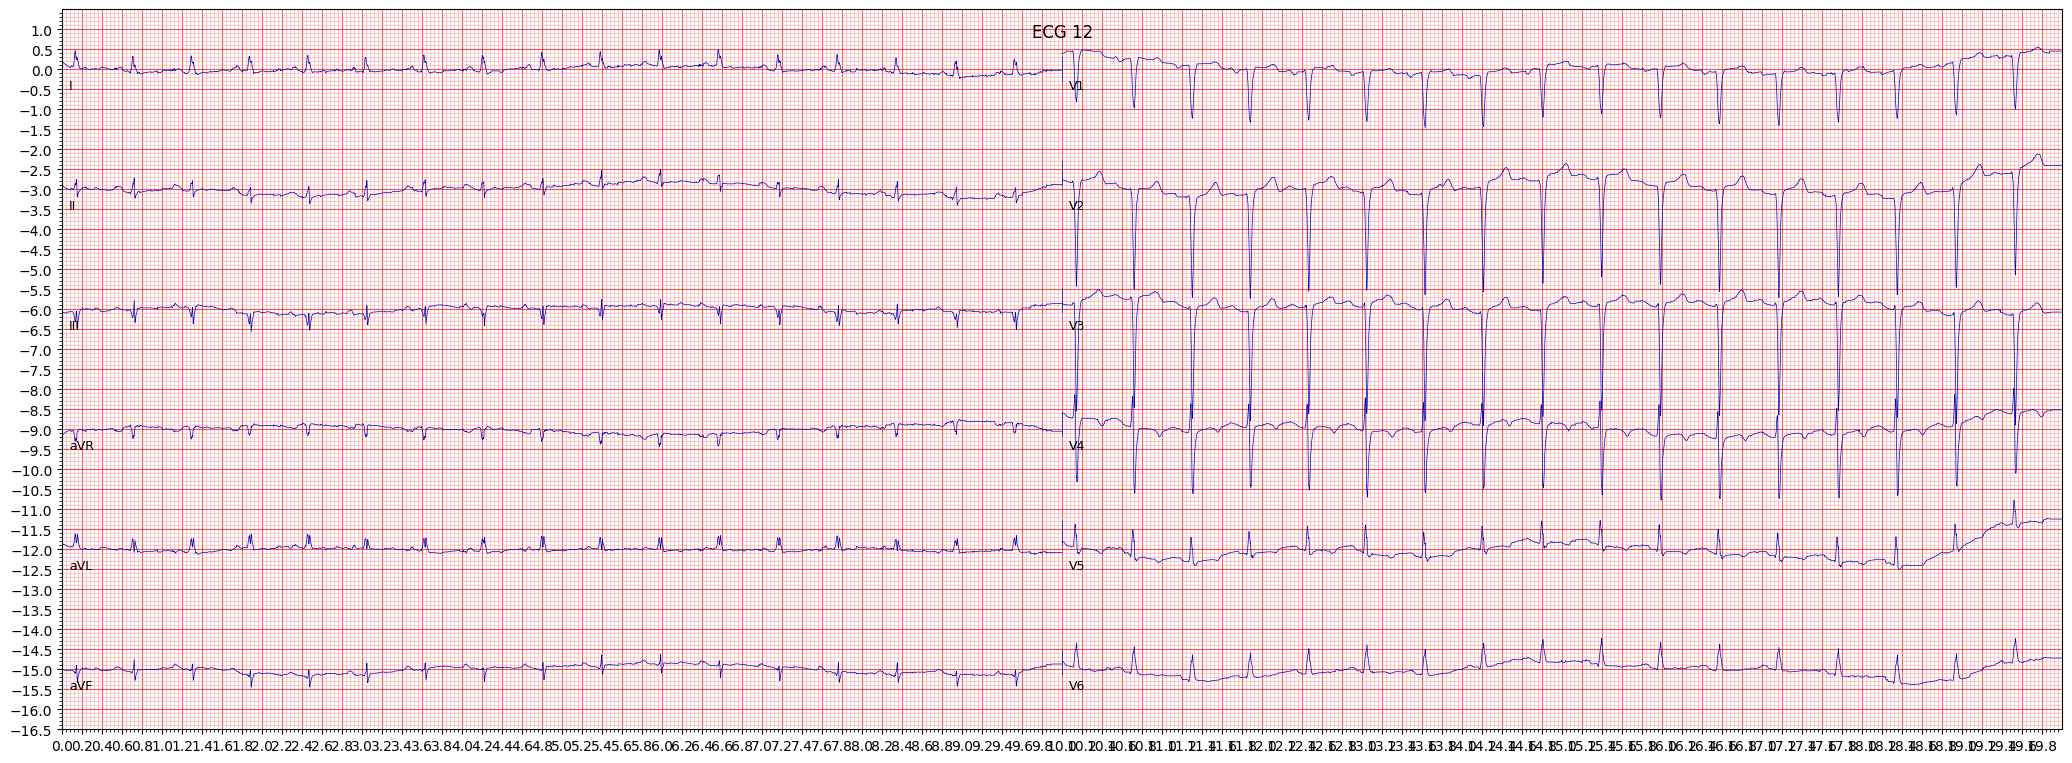 anteroseptal myocardial infarction (ASMI) example 1738